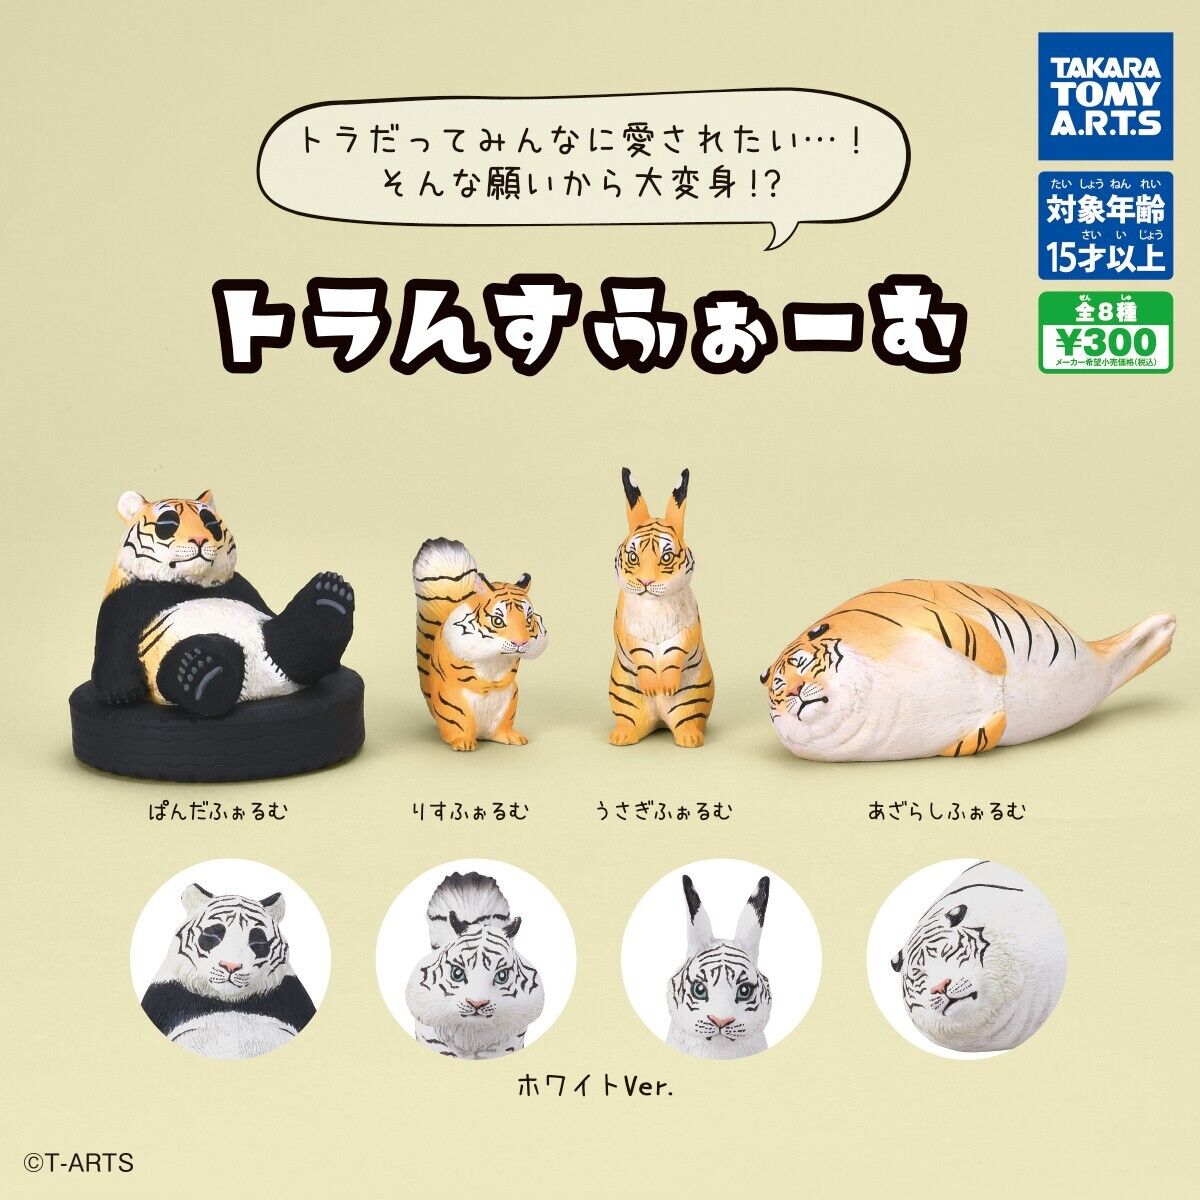 Toransform Tiger Figure Mascot All 8 Types Complete Set Capsule Toy Japan